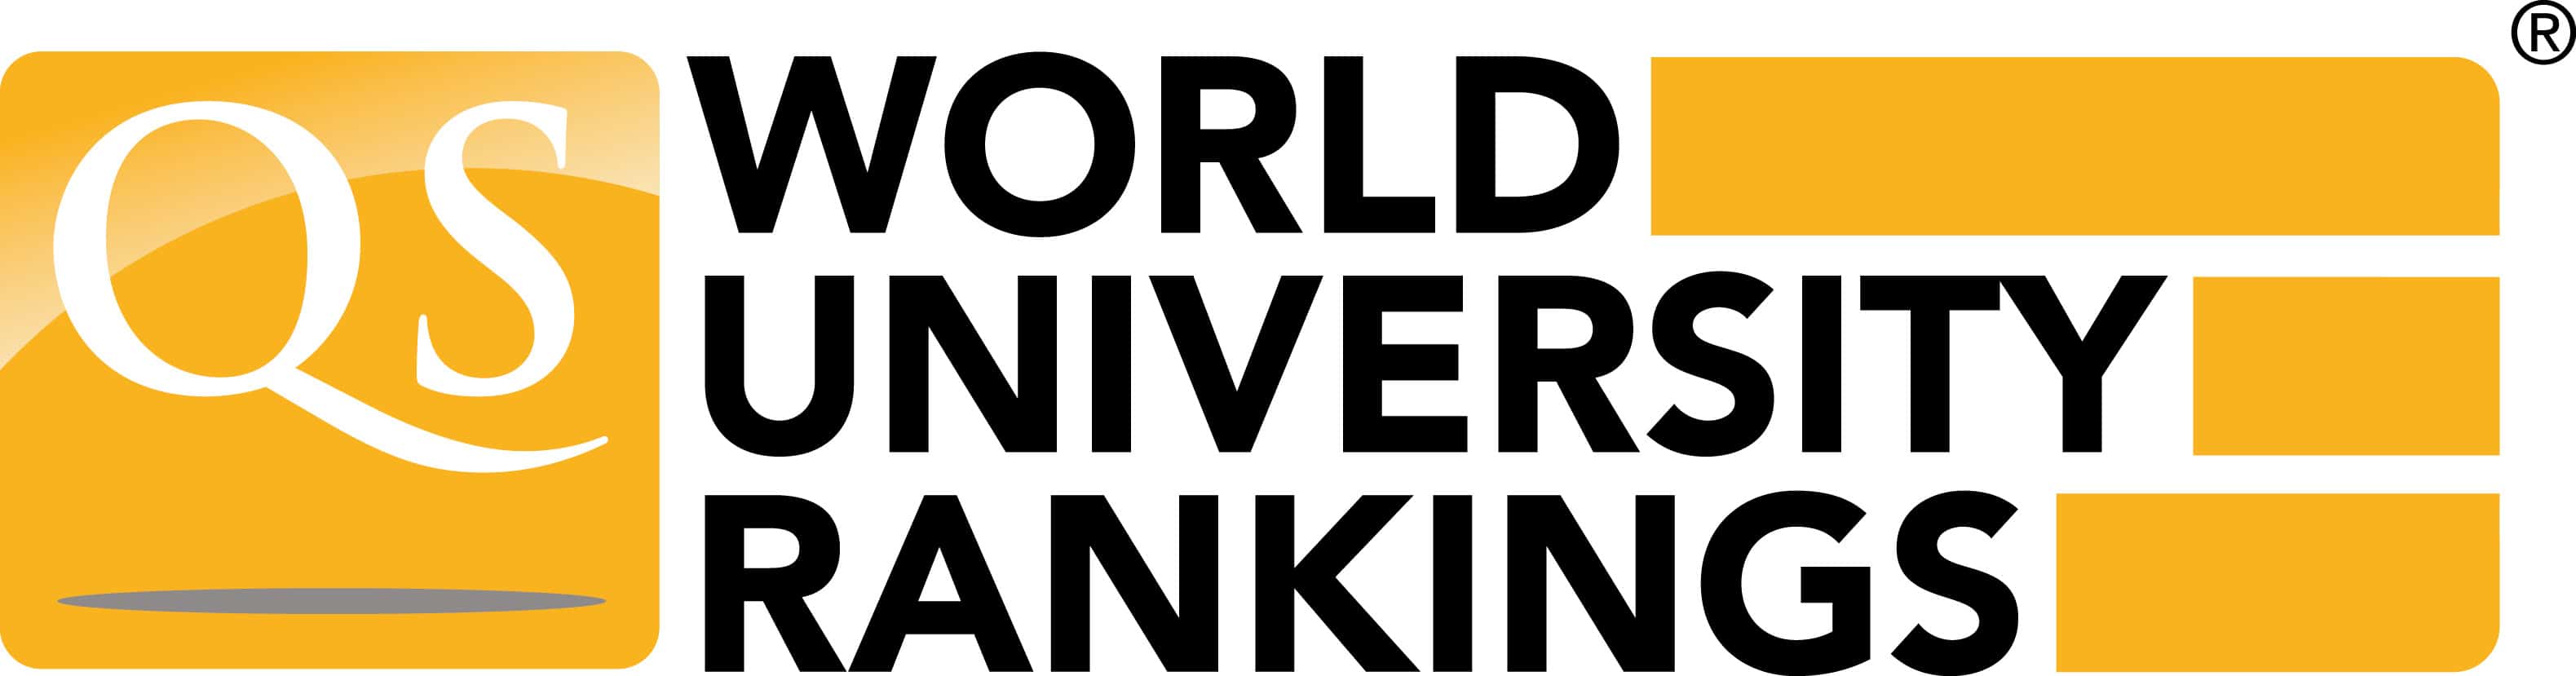 Ranking the best. QS World University rankings. QS логотип. World University rankings logo. Рейтинг QS.